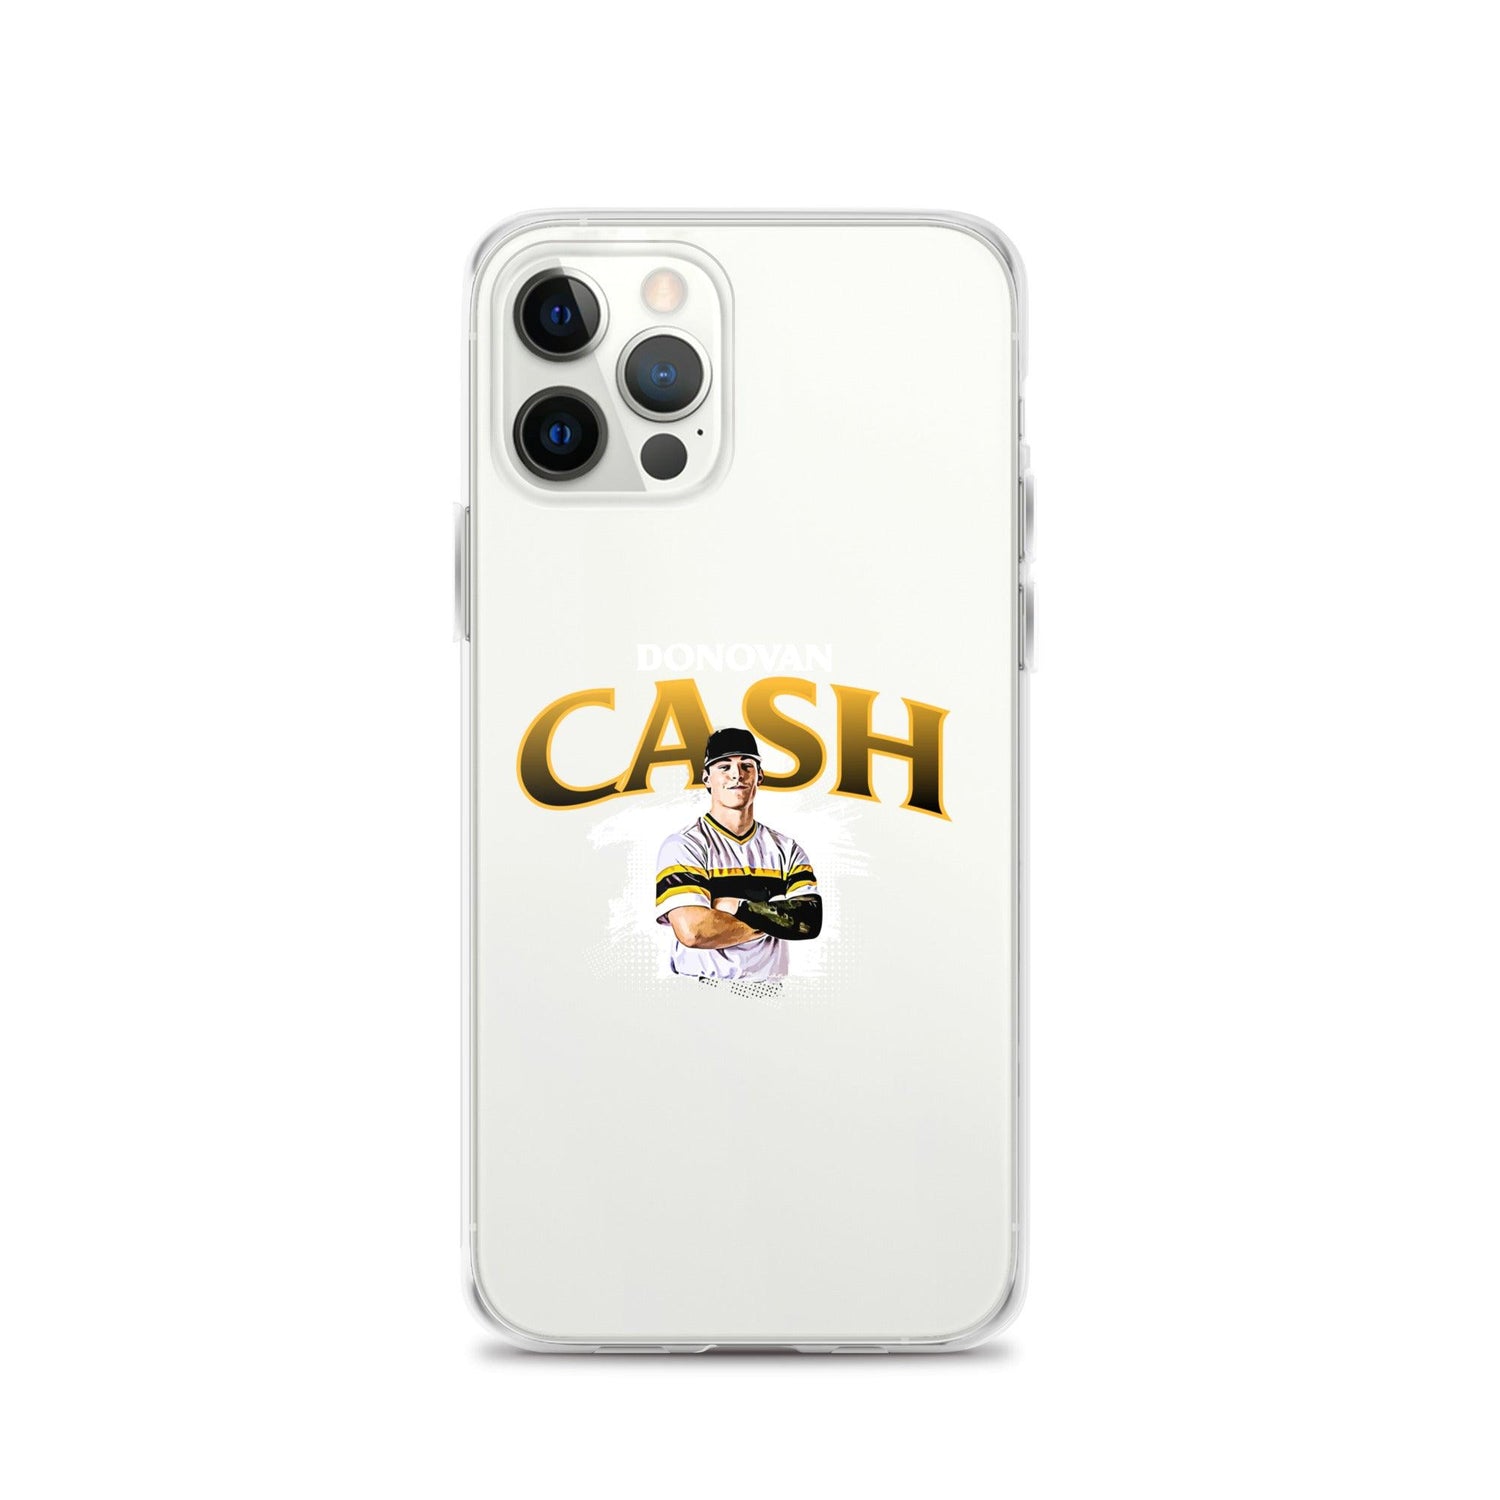 Donovan Cash "Stay Ready" iPhone Case - Fan Arch